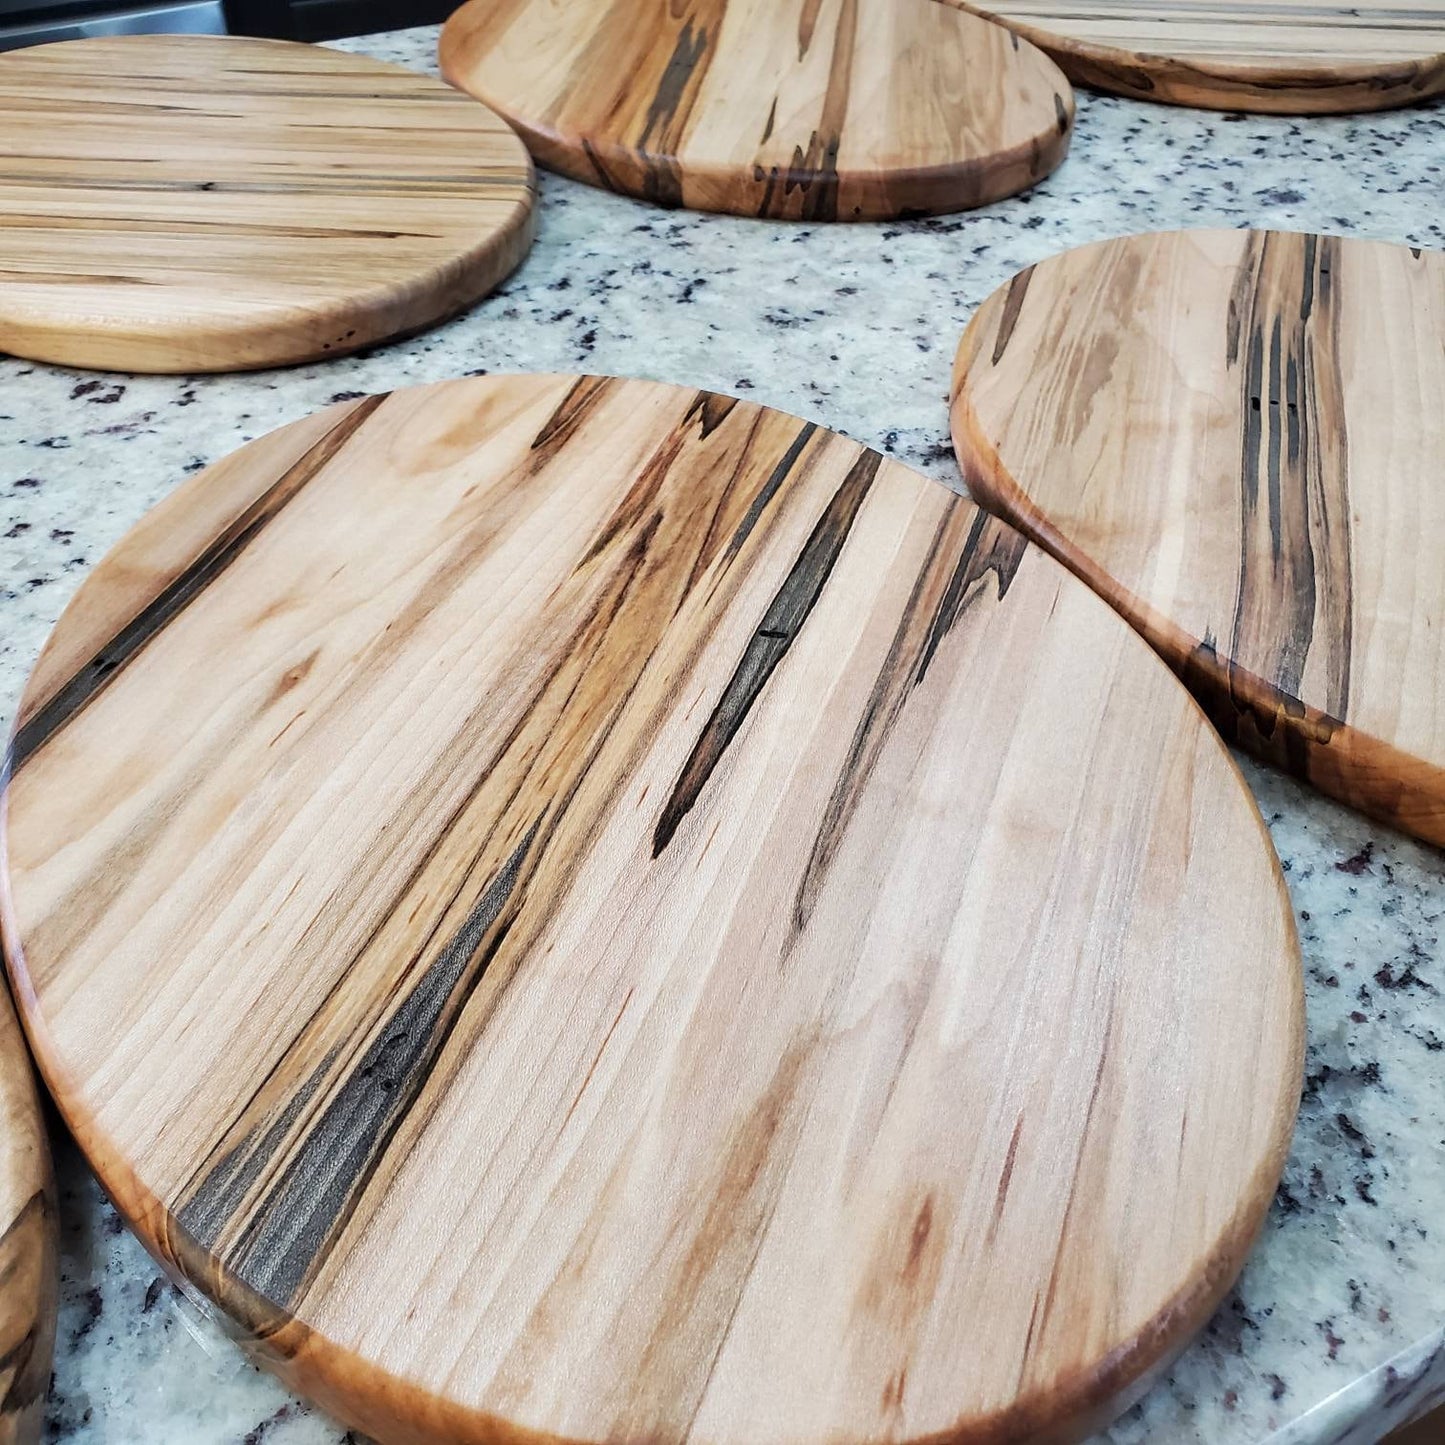 Charcuterie Board - Cheese Board - Cutting Board - Entertaining - Decor - Ambrosia Maple - Hardwood - Handmade - Distinctive and Unique